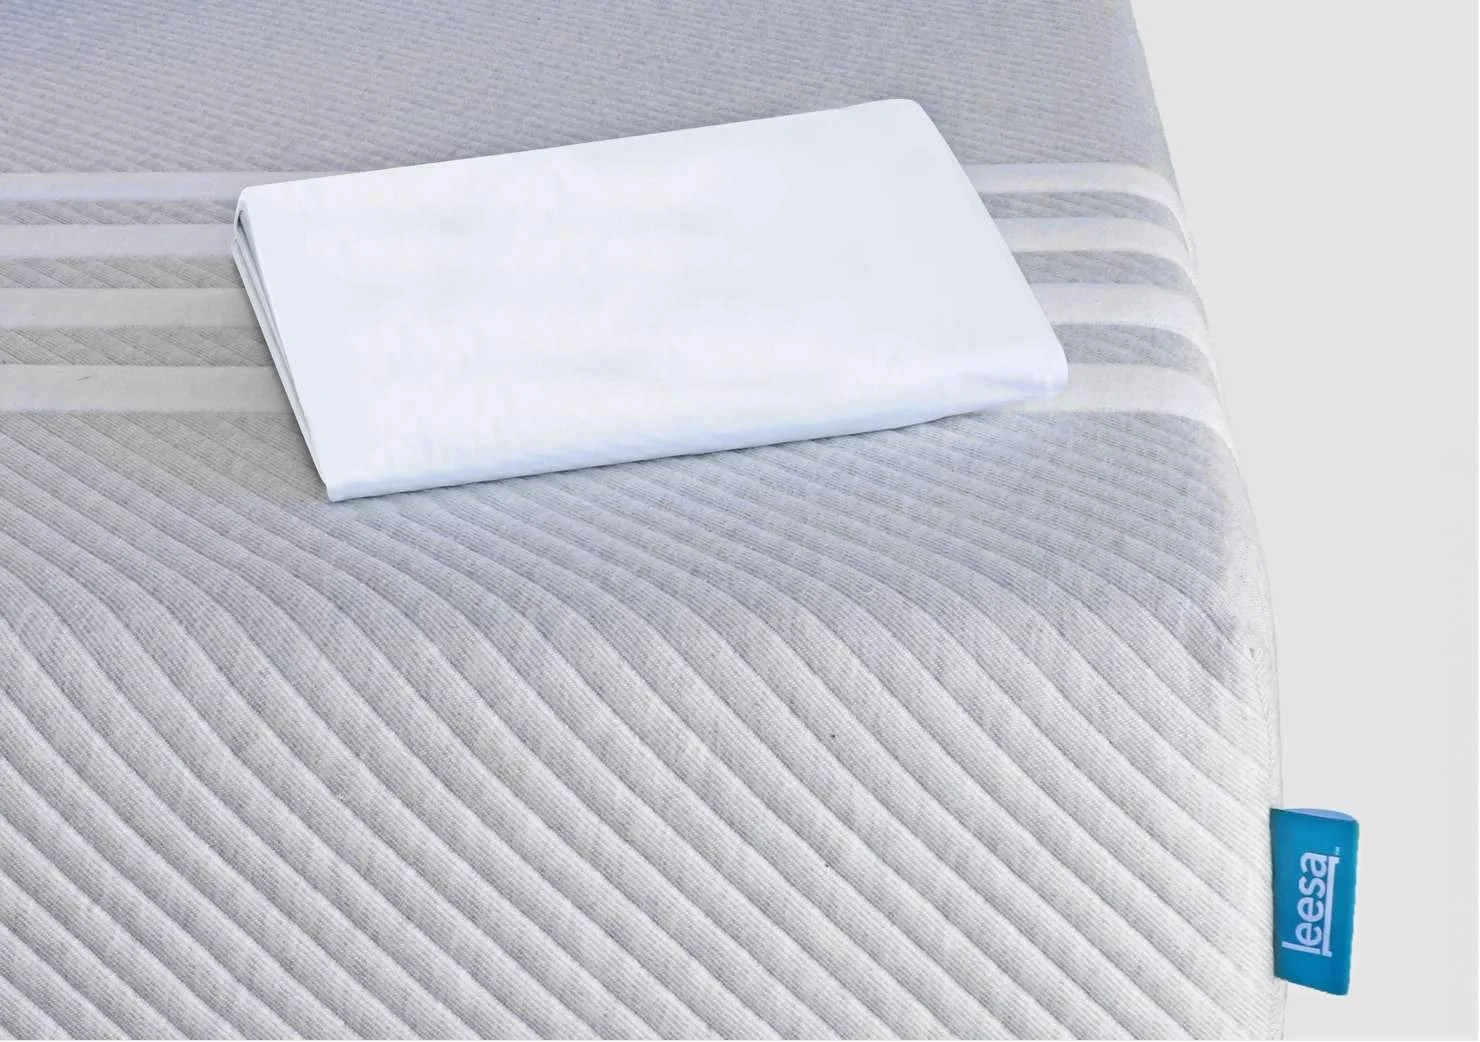 mattress protector reviewed